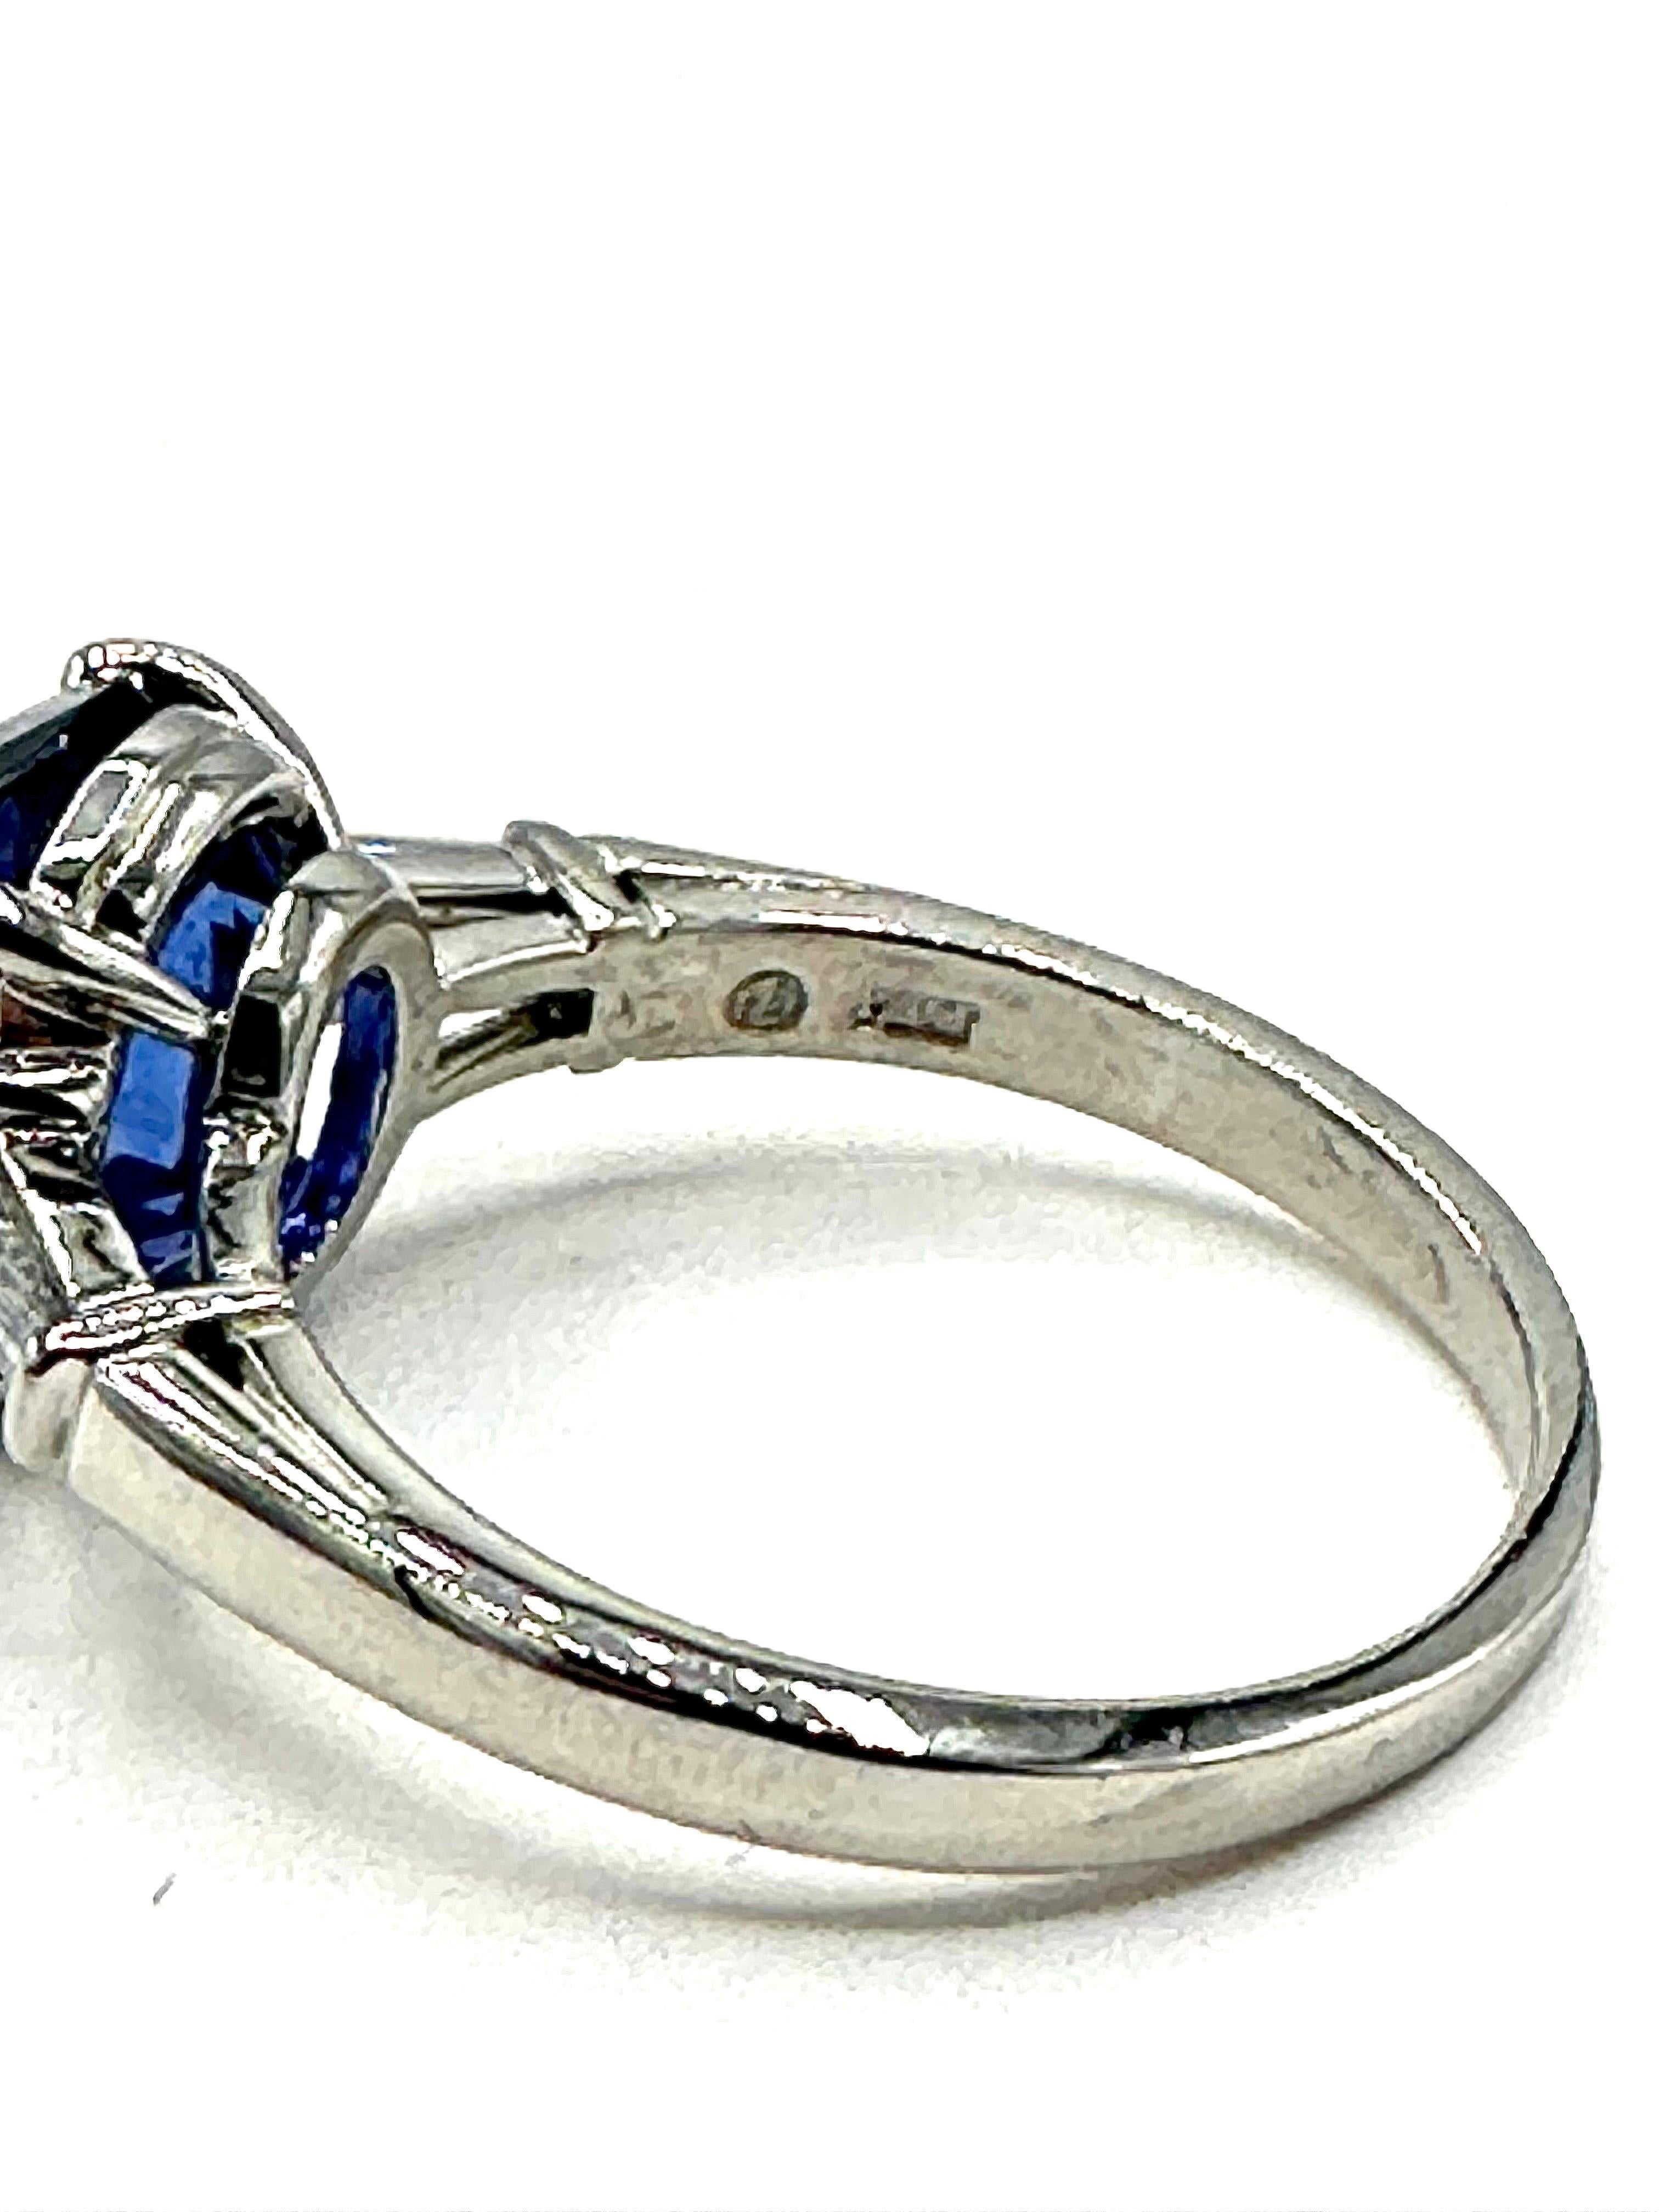 Oscar Heyman 4.82 Carat Sapphire and Diamond Platinum Ring For Sale 1